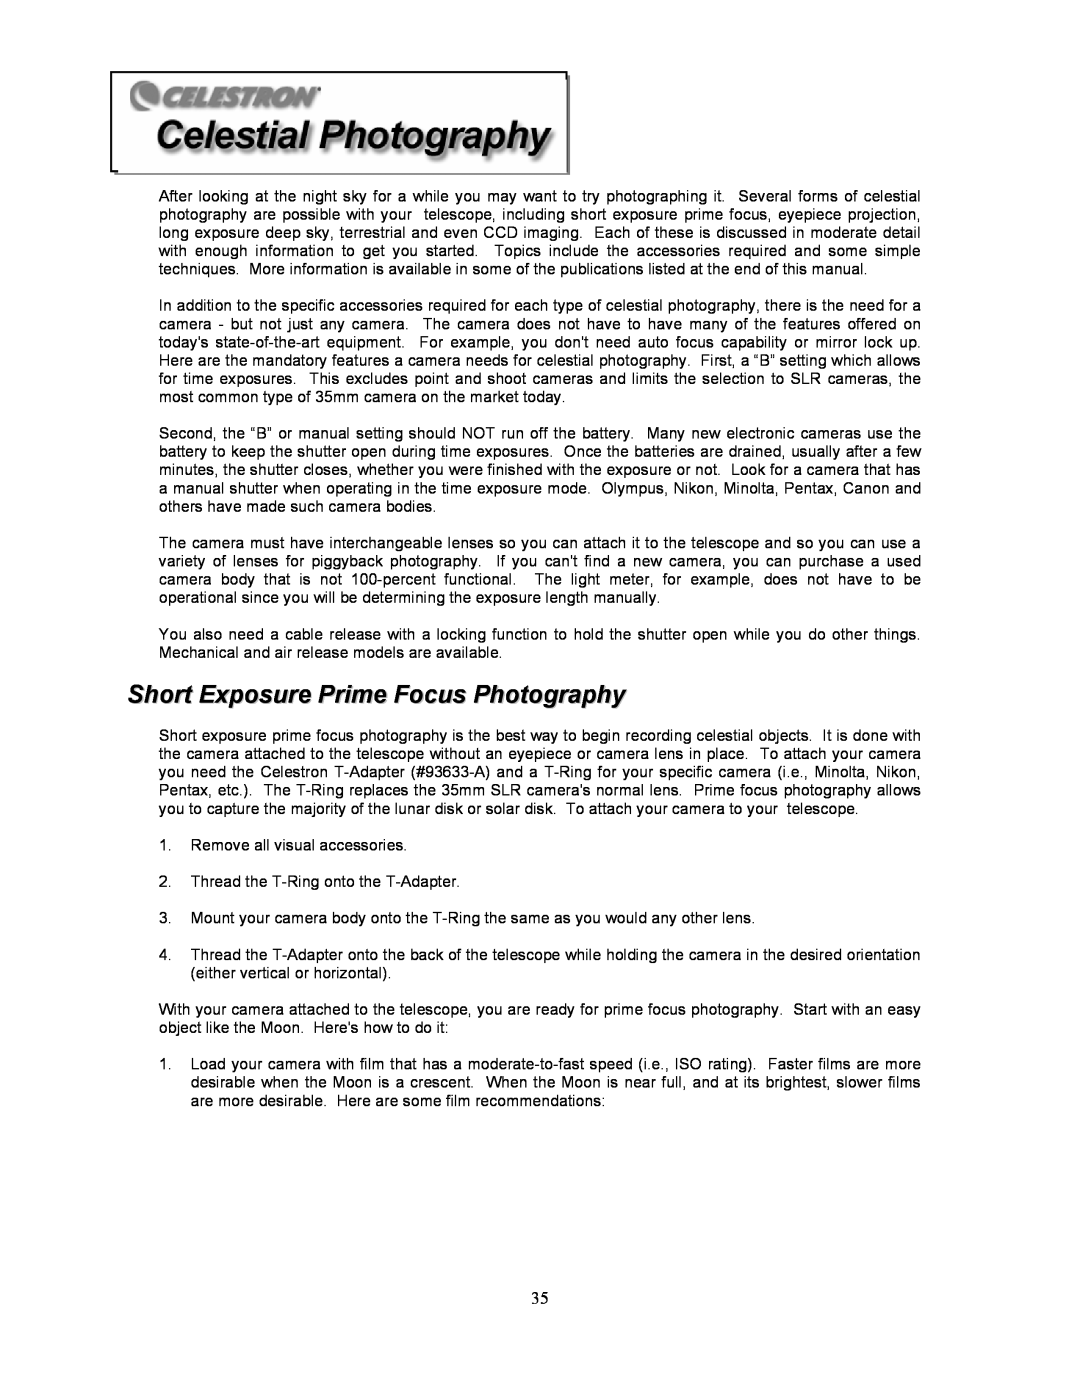 Celestron 8i manual Short Exposure Prime Focus Photography 